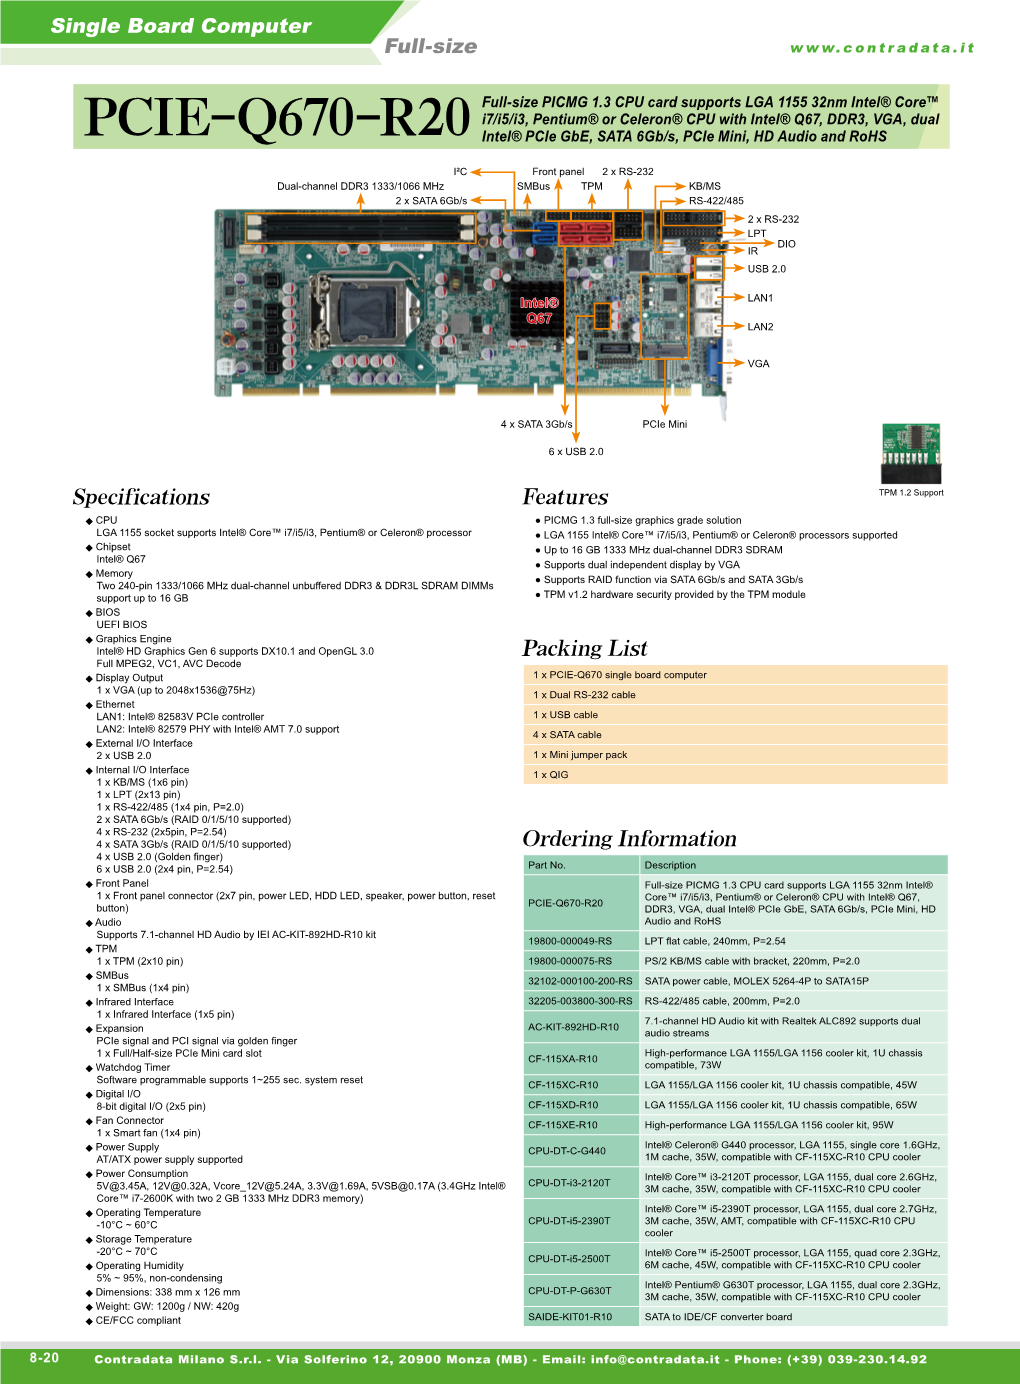 PCIE-Q670-R20 Intel® Pcie Gbe, SATA 6Gb/S, Pcie Mini, HD Audio and Rohs